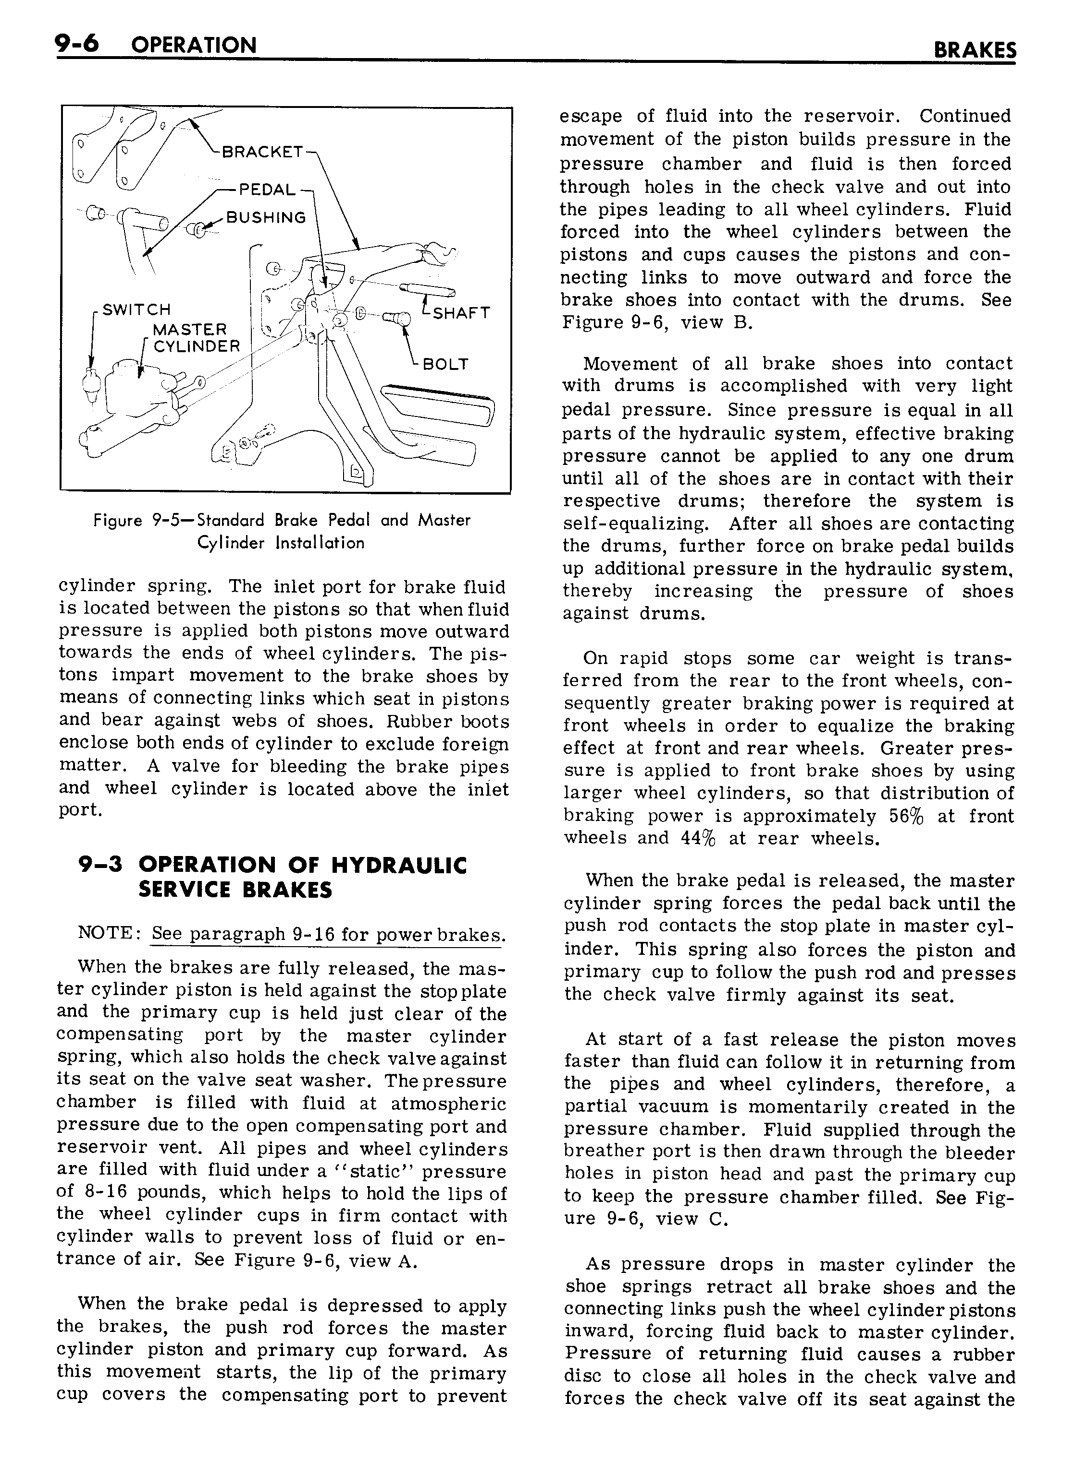 n_09 1961 Buick Shop Manual - Brakes-006-006.jpg